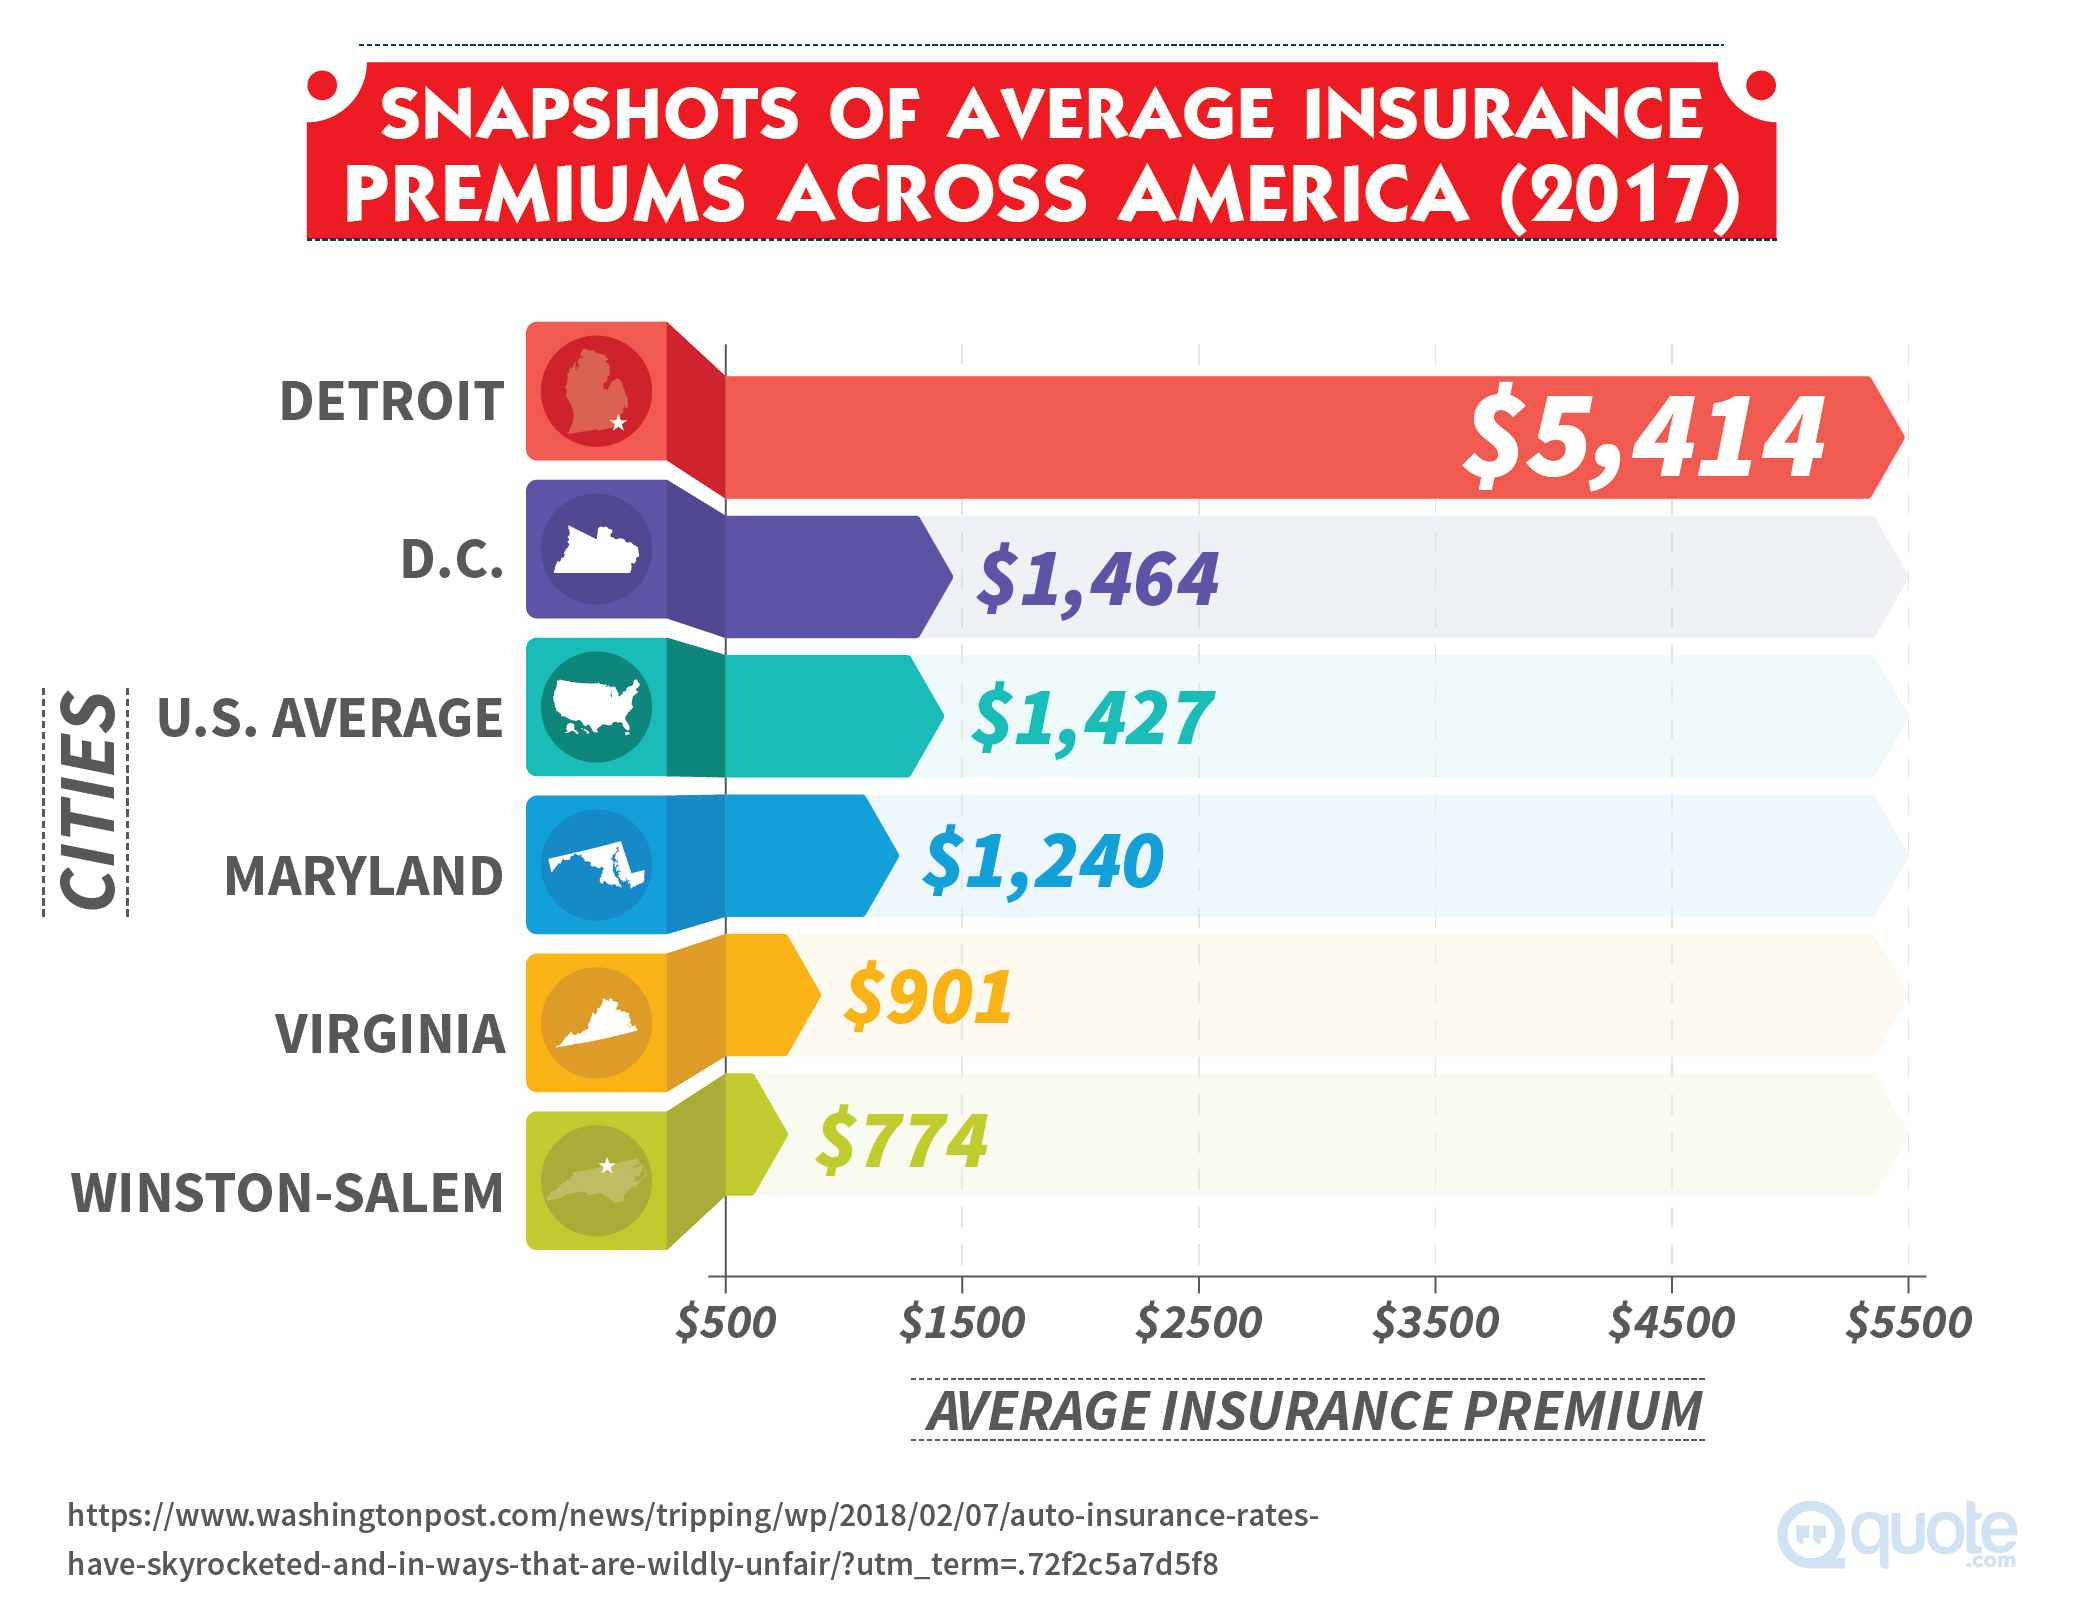 Snapshots of Average Insurance Premiums Across America